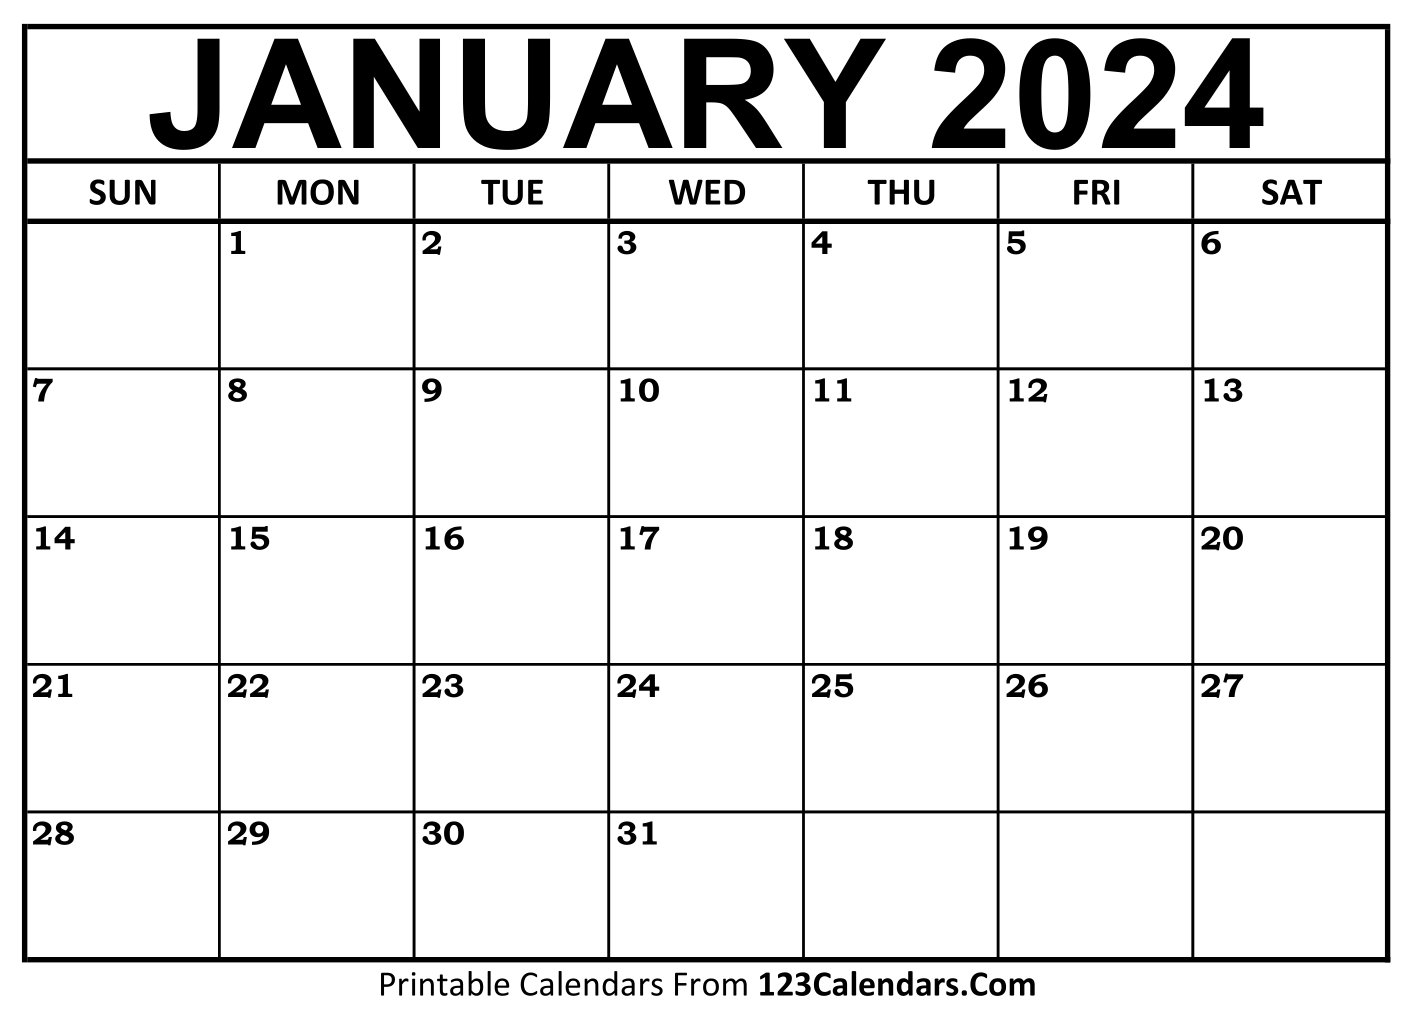 Printable January 2024 Calendar Templates - 123Calendars for Blank Printable Calendar January 2024